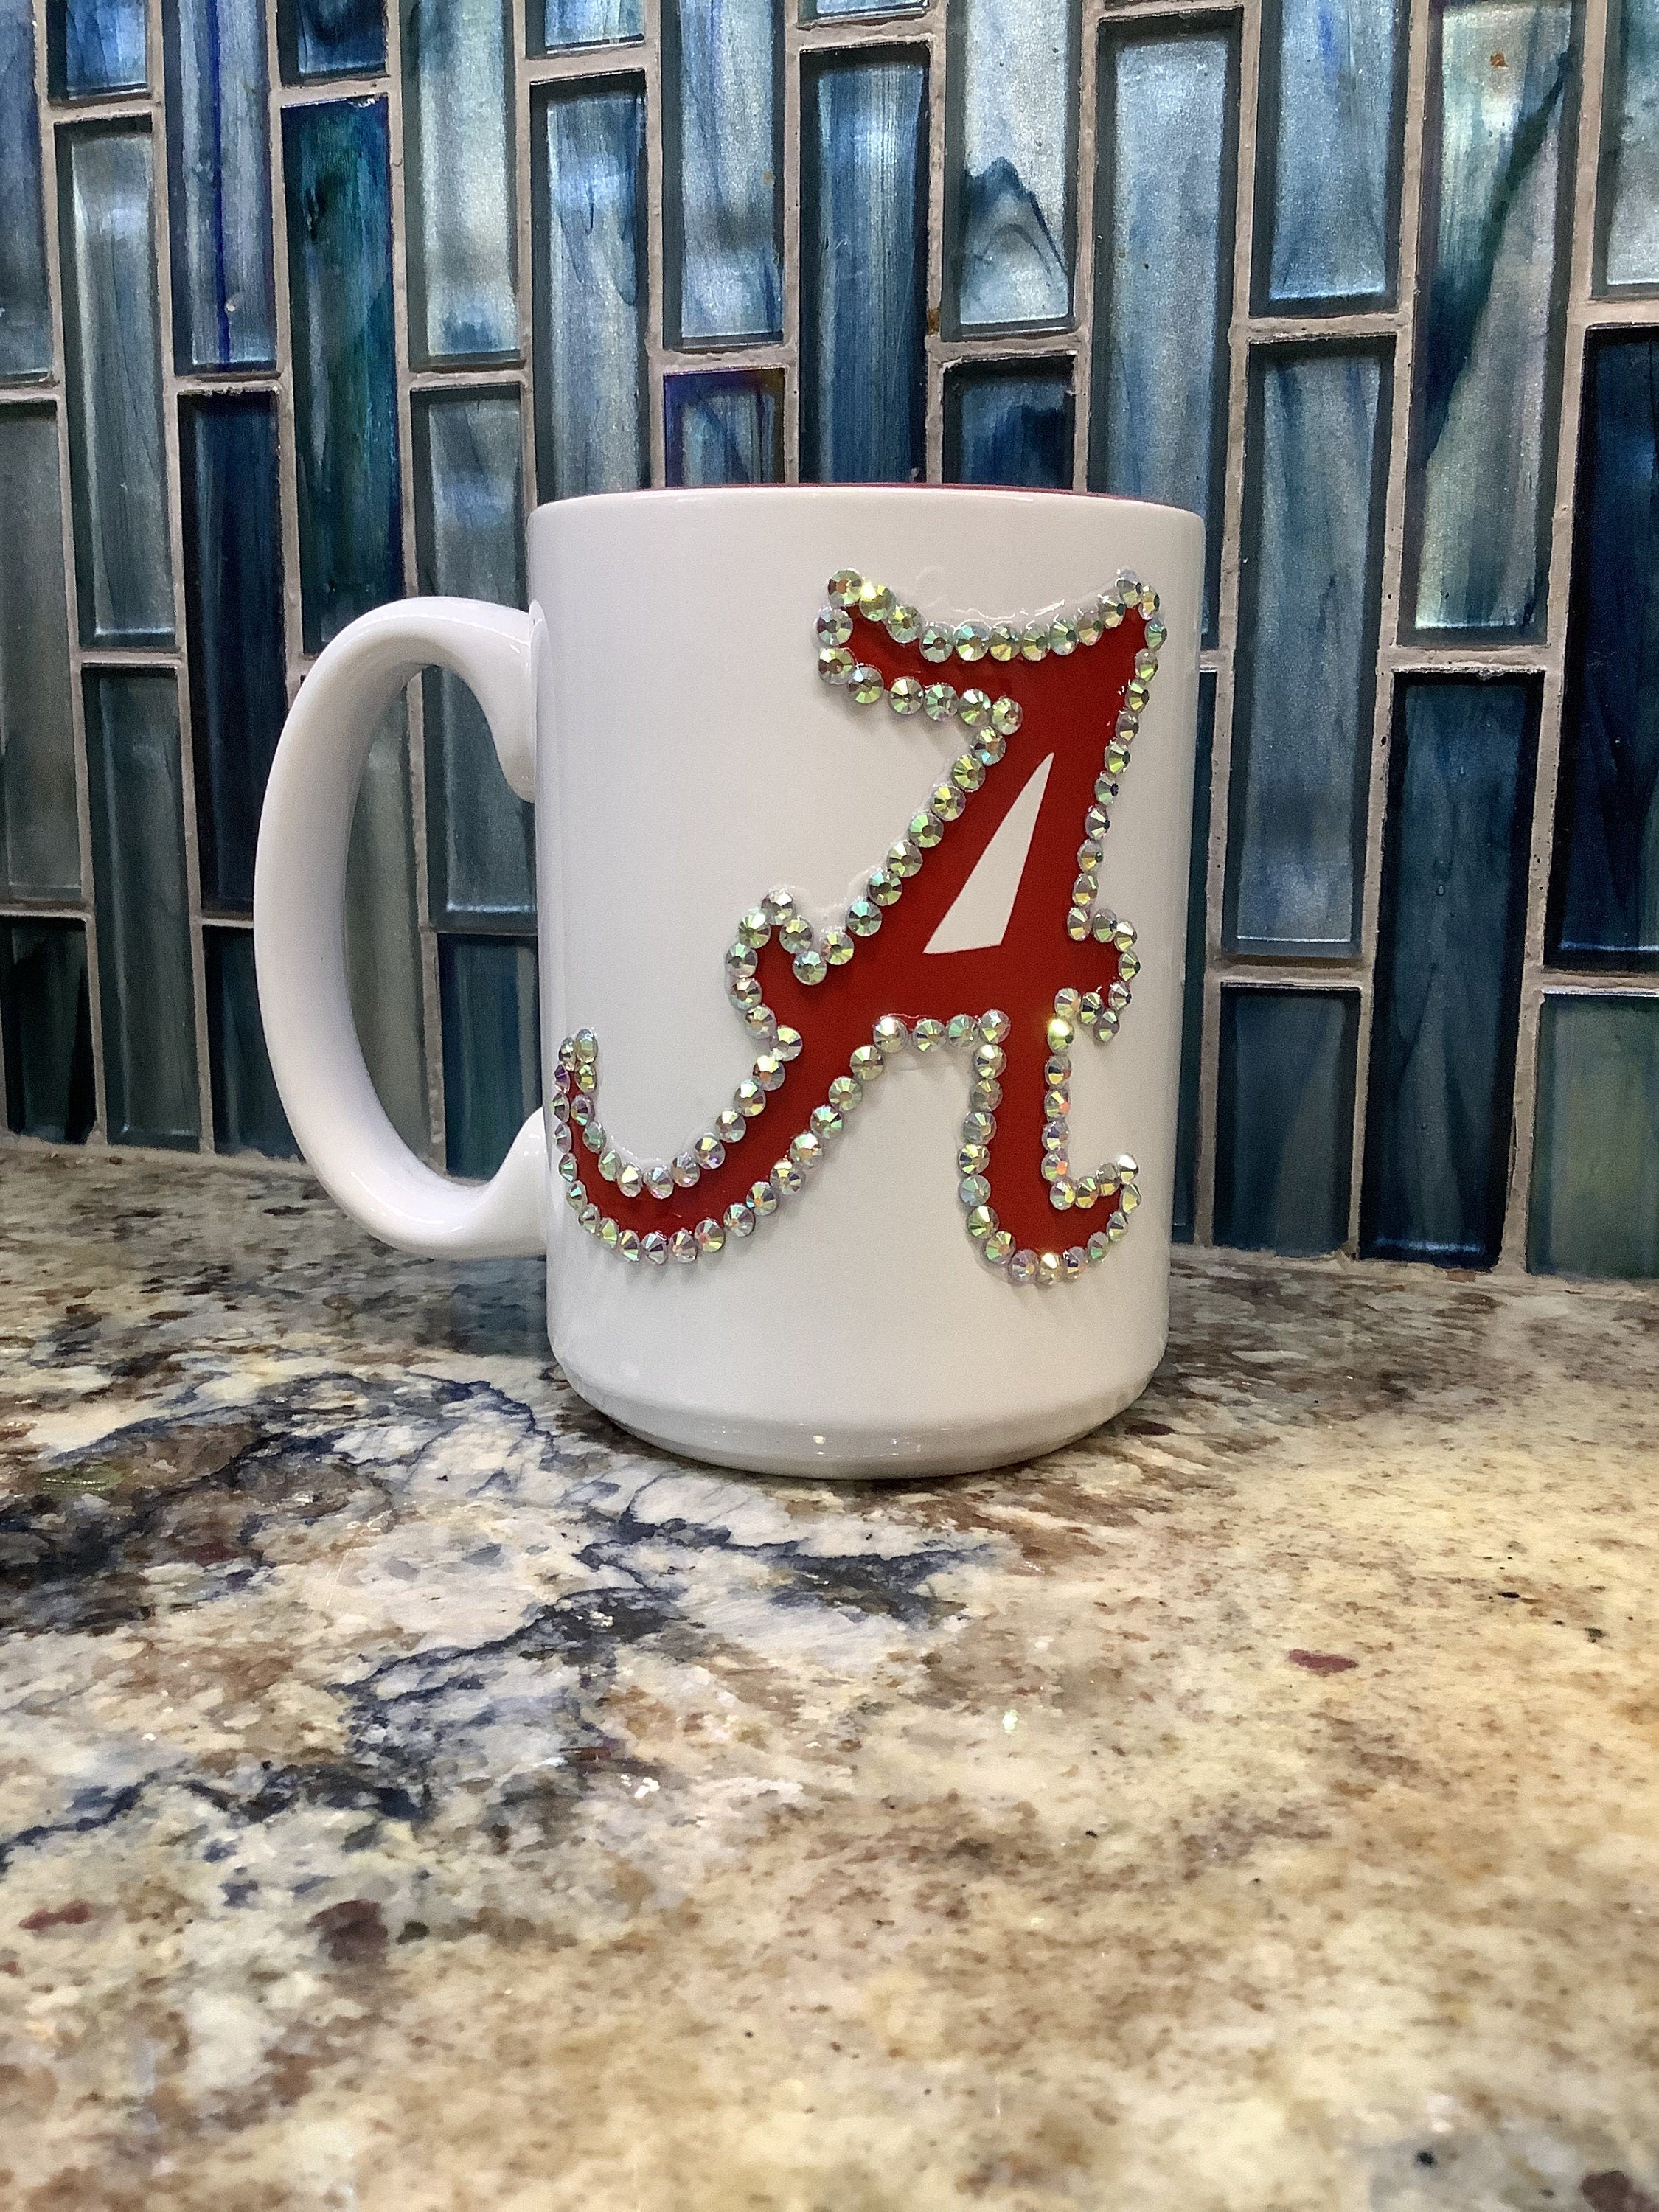 Alabama Crimson Tide 14oz Relief Coffee Mug